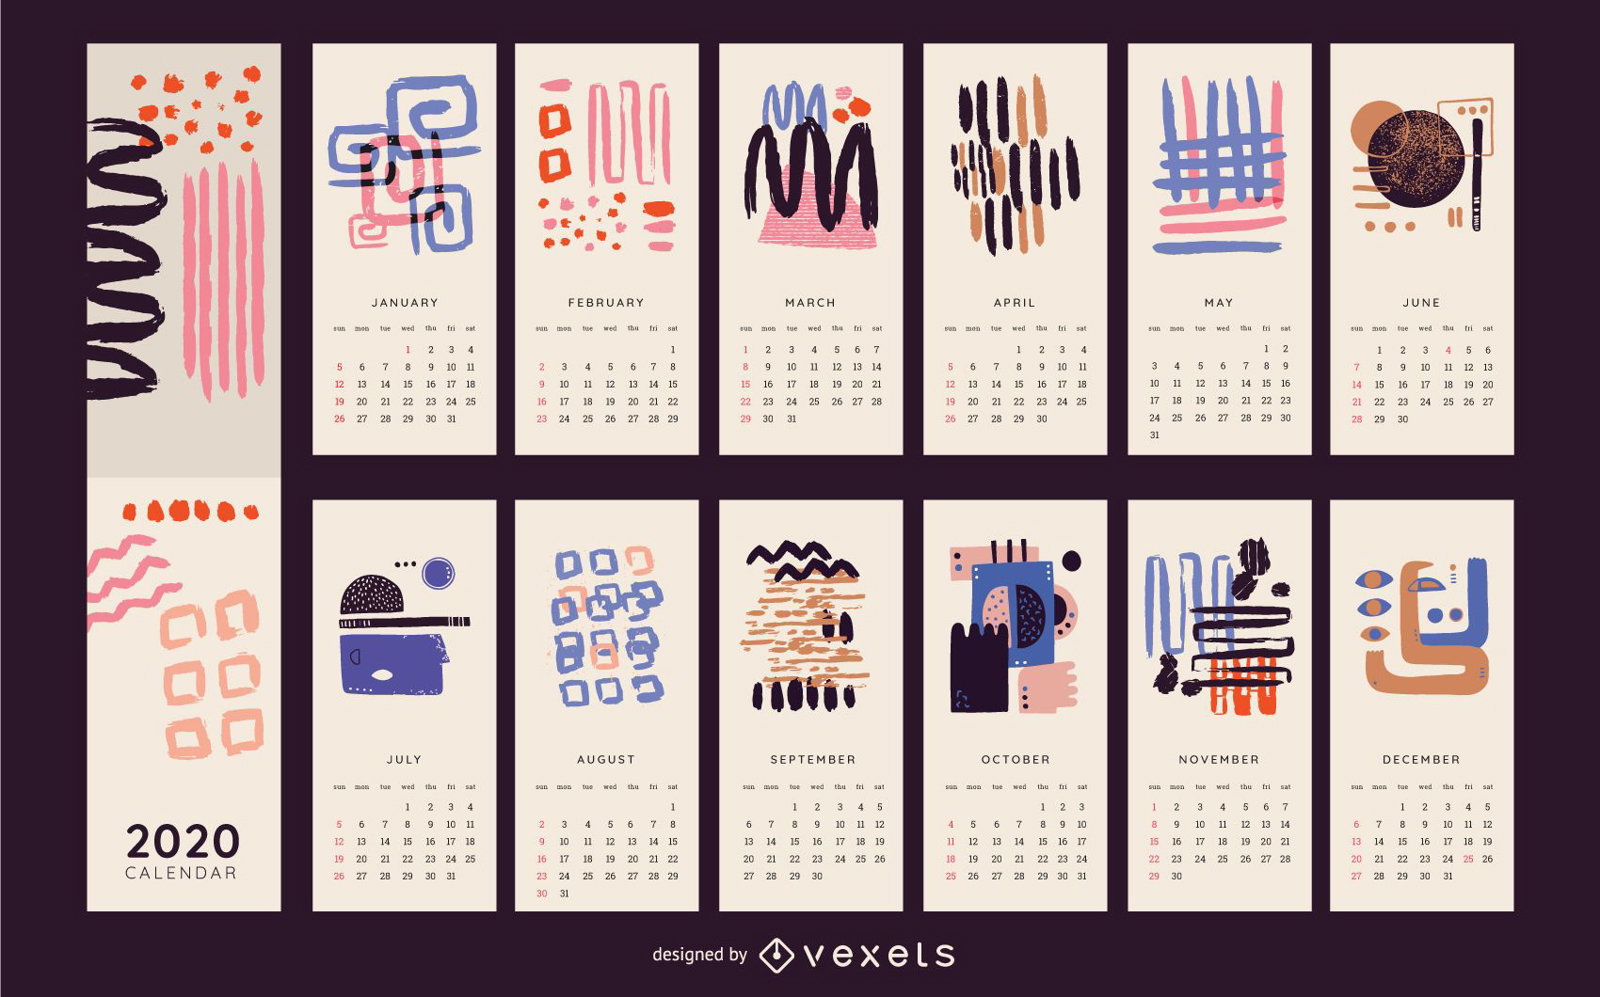 Abstract colorful 2020 calendar design